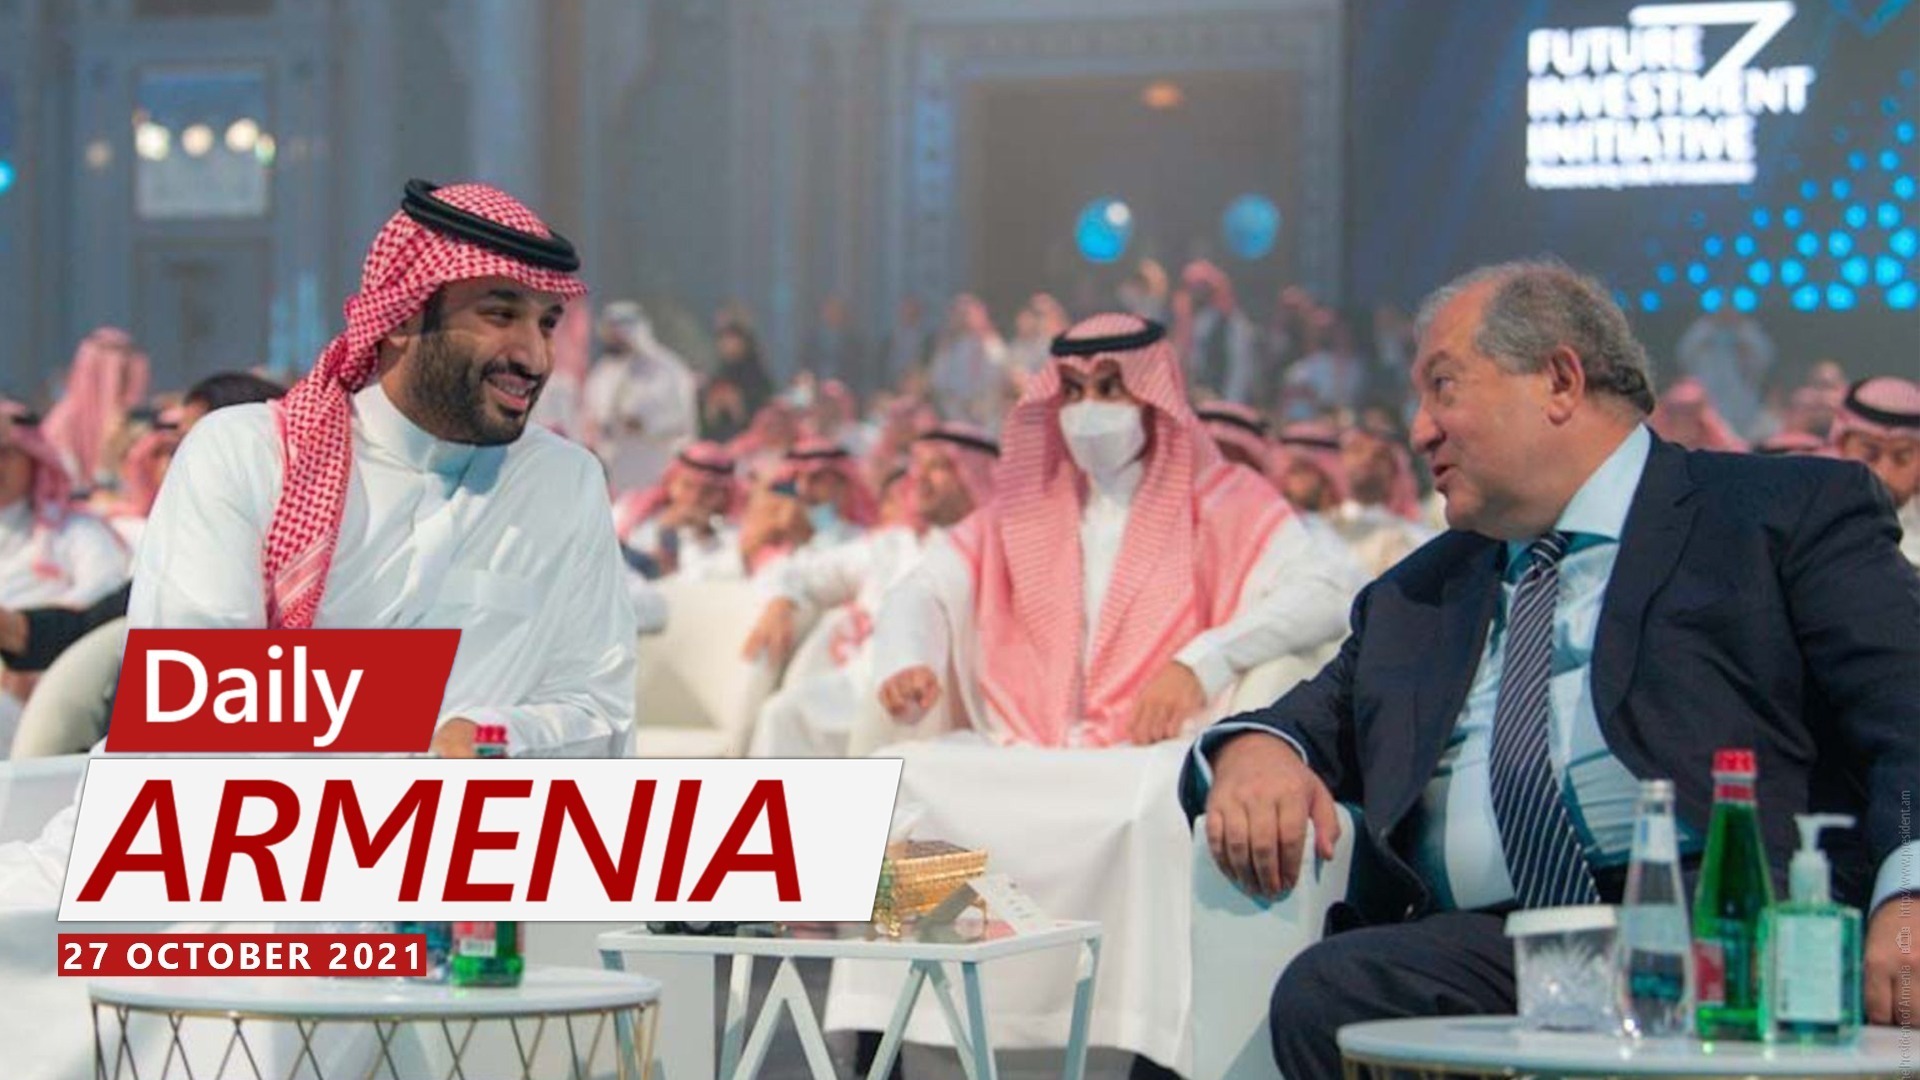 Armenian president meets Saudi crown prince in historic visit